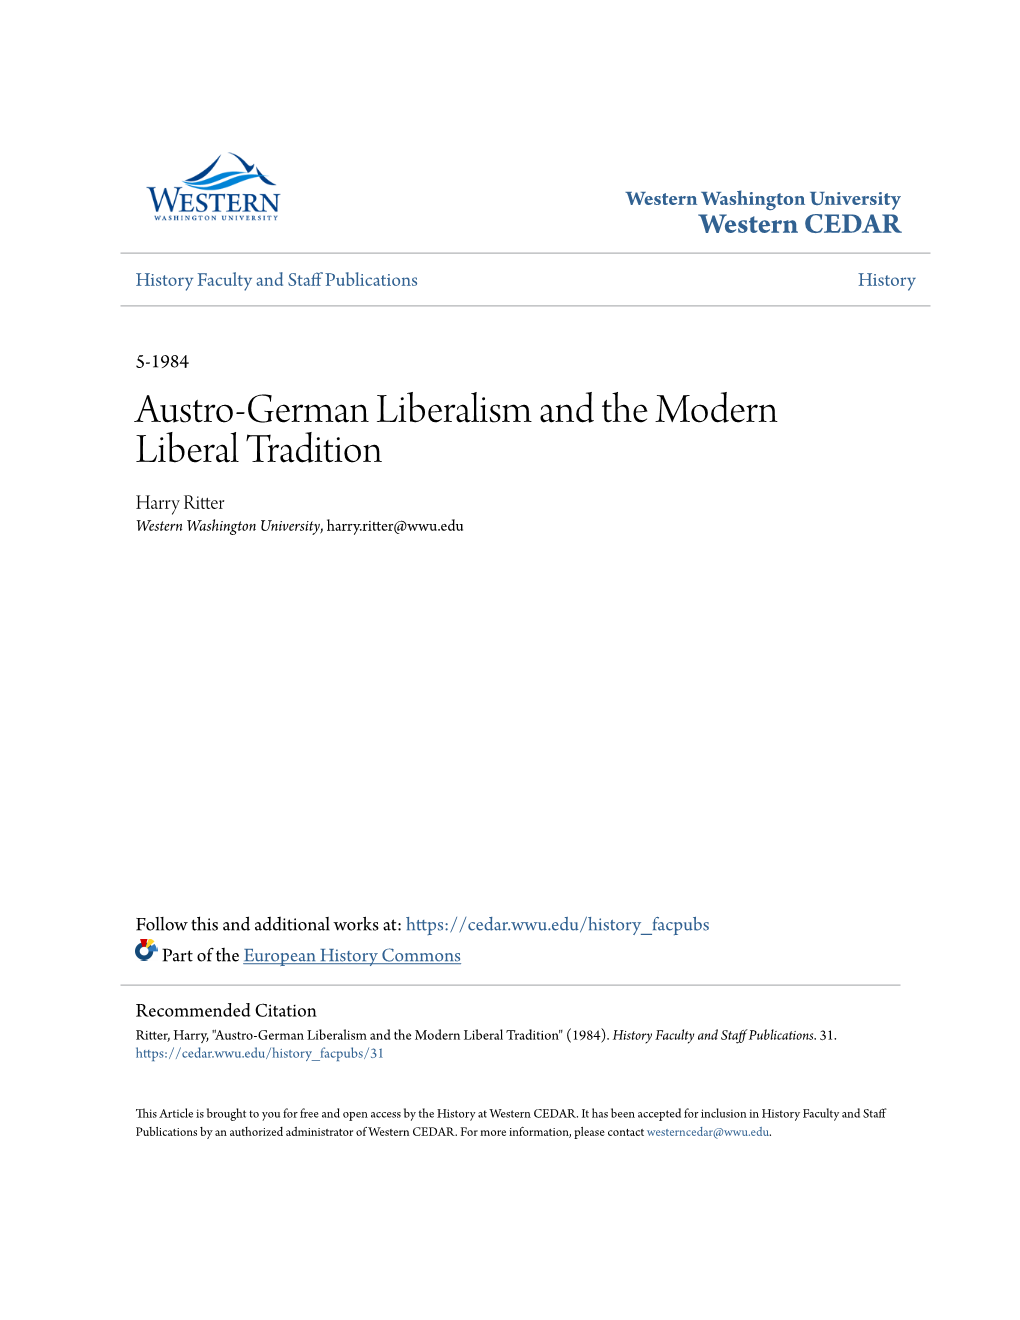 Austro-German Liberalism and the Modern Liberal Tradition Harry Ritter Western Washington University, Harry.Ritter@Wwu.Edu